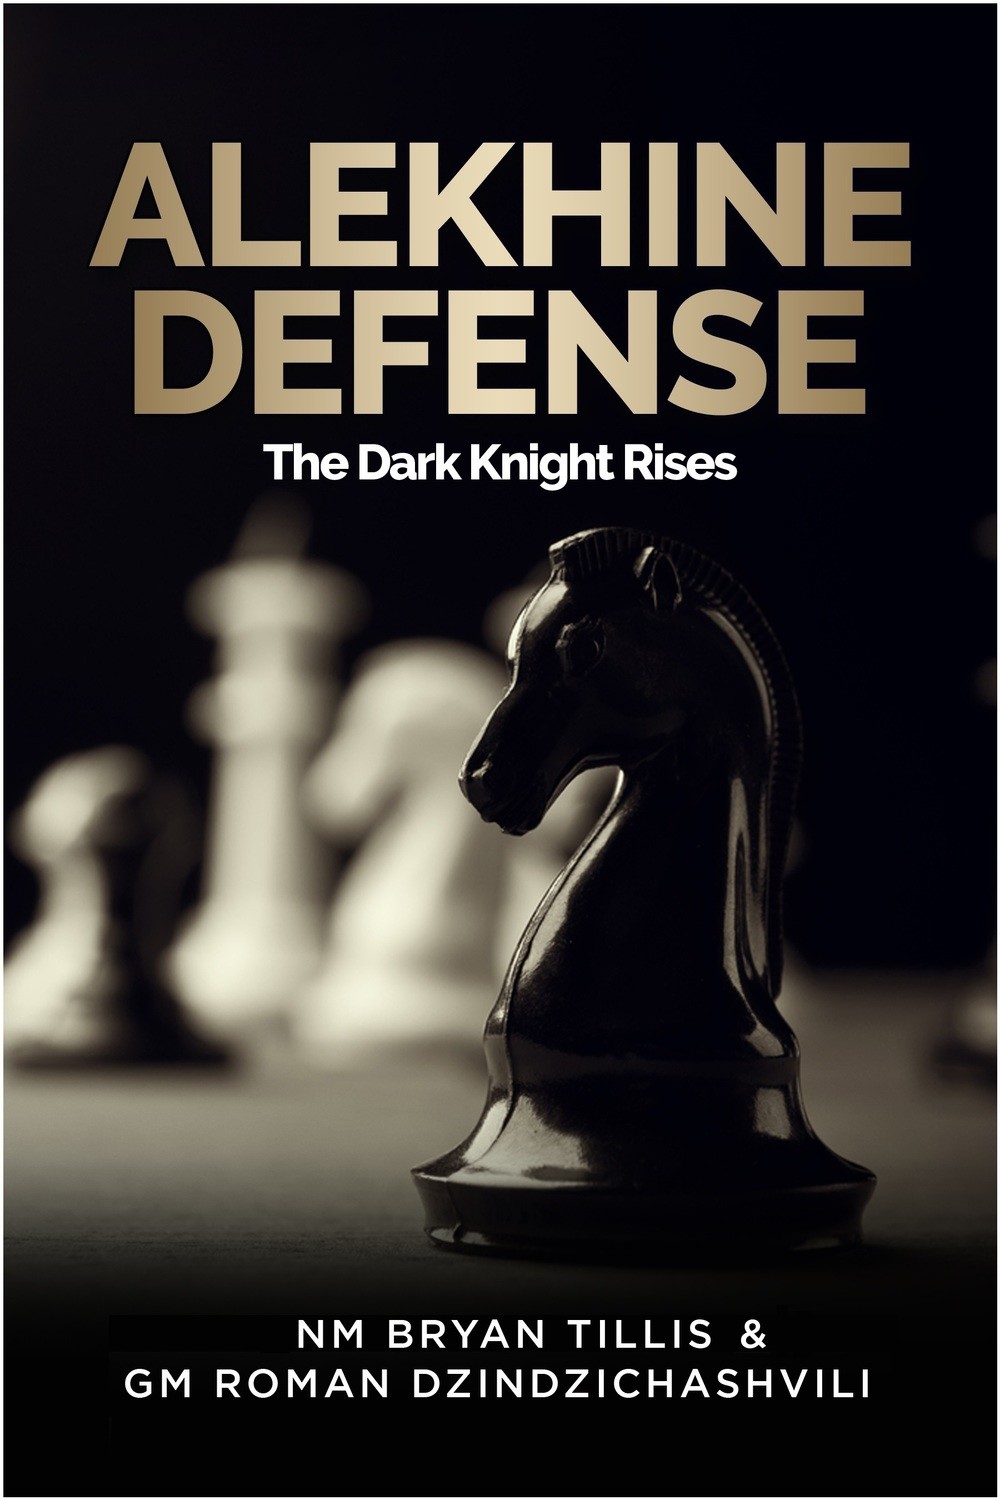 Alekhine Defense - The Dark Knight Rises